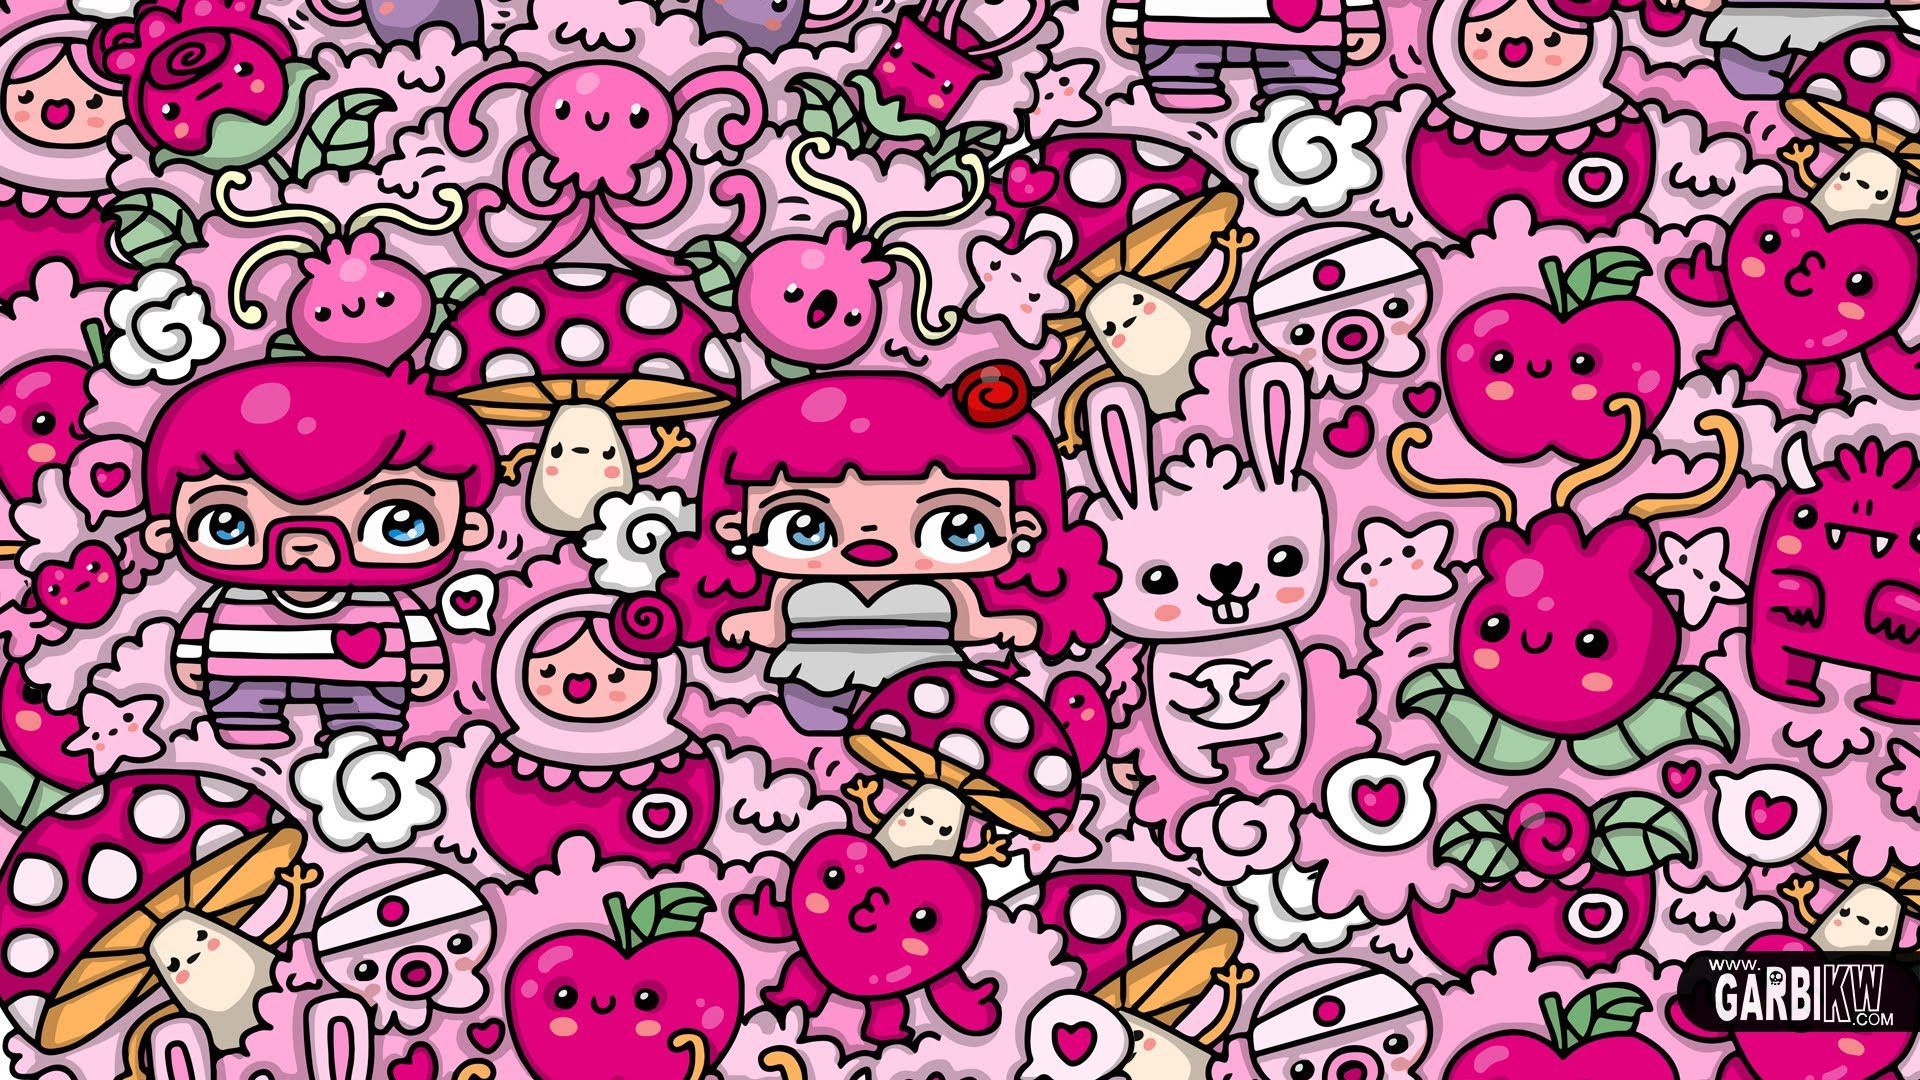 Kawaii Pink - #Kawaii Graffiti and Cute Doodles by Garbi KW. Cute doodles, Artsy background, Doodles